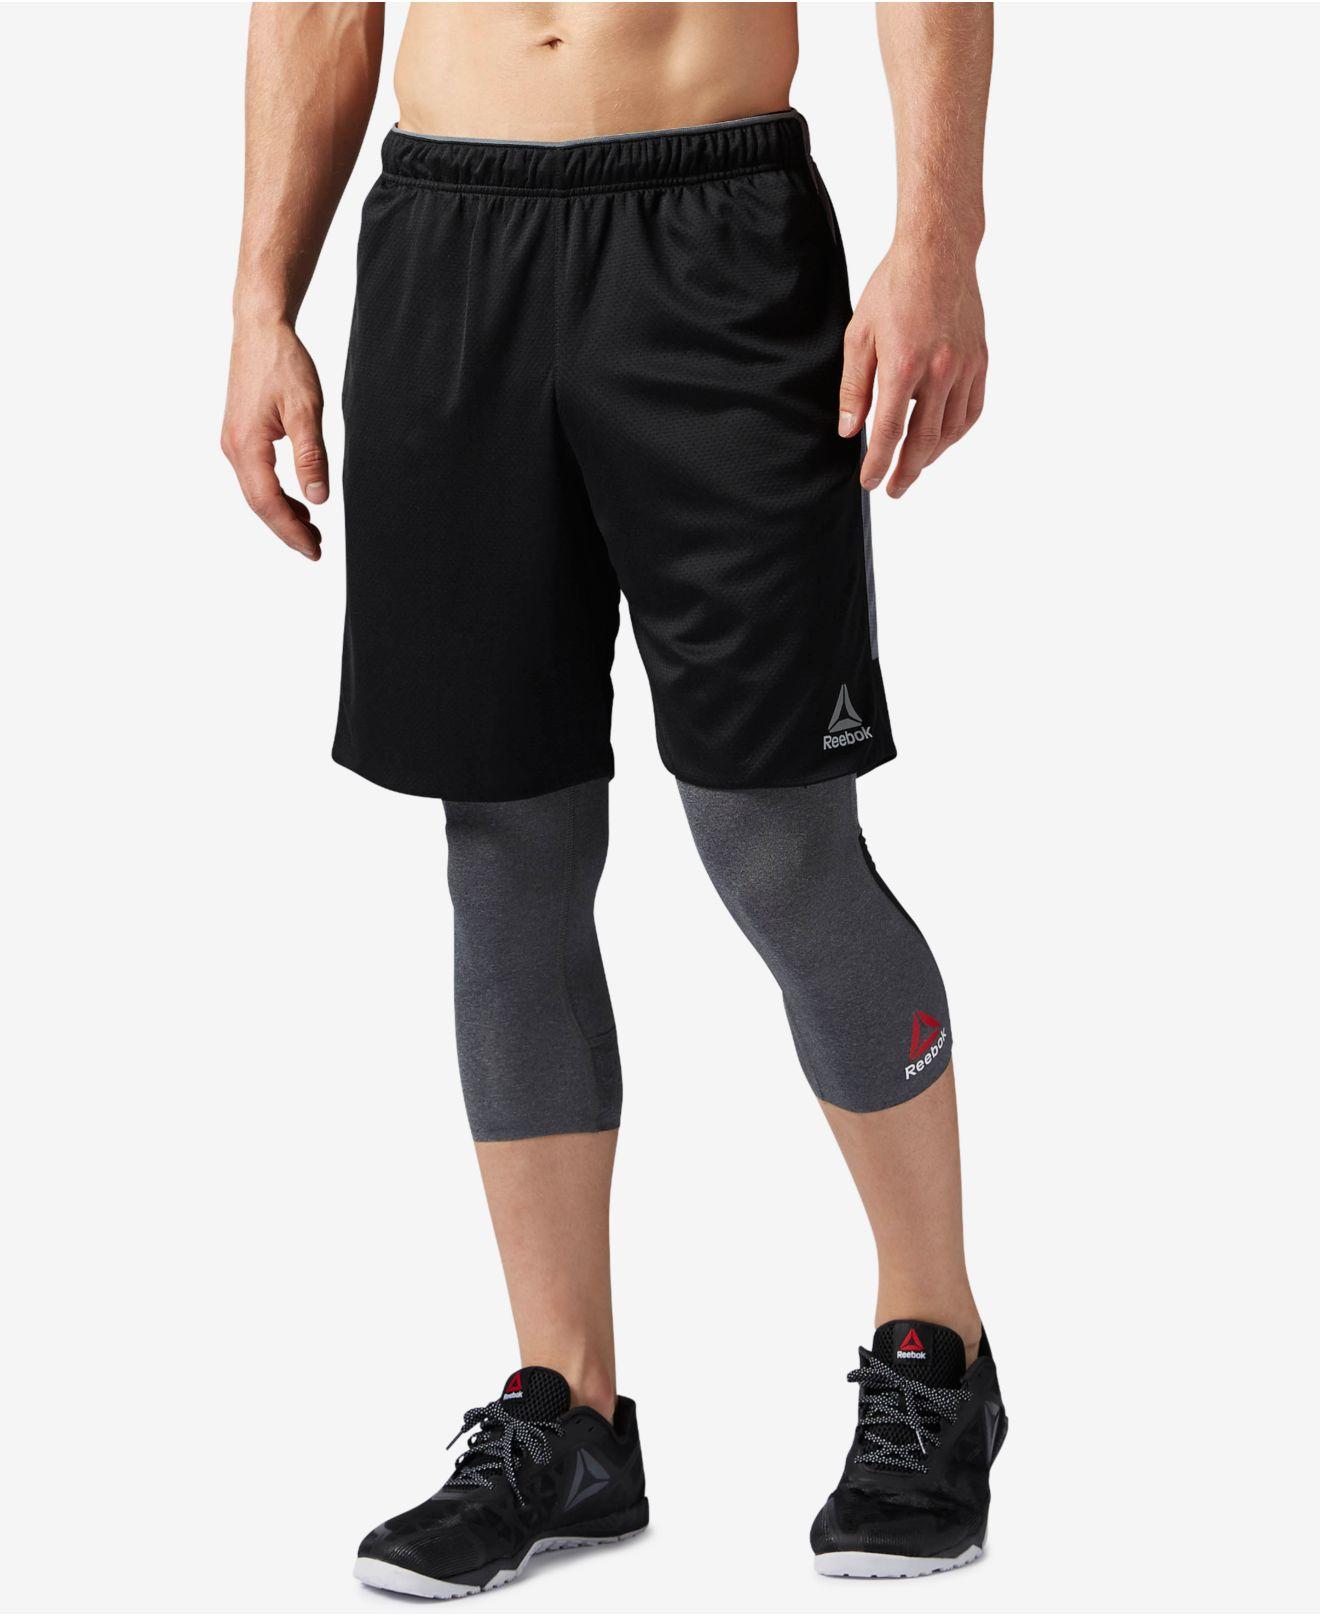 Lyst - Reebok Men's Workout Shorts in Black for Men